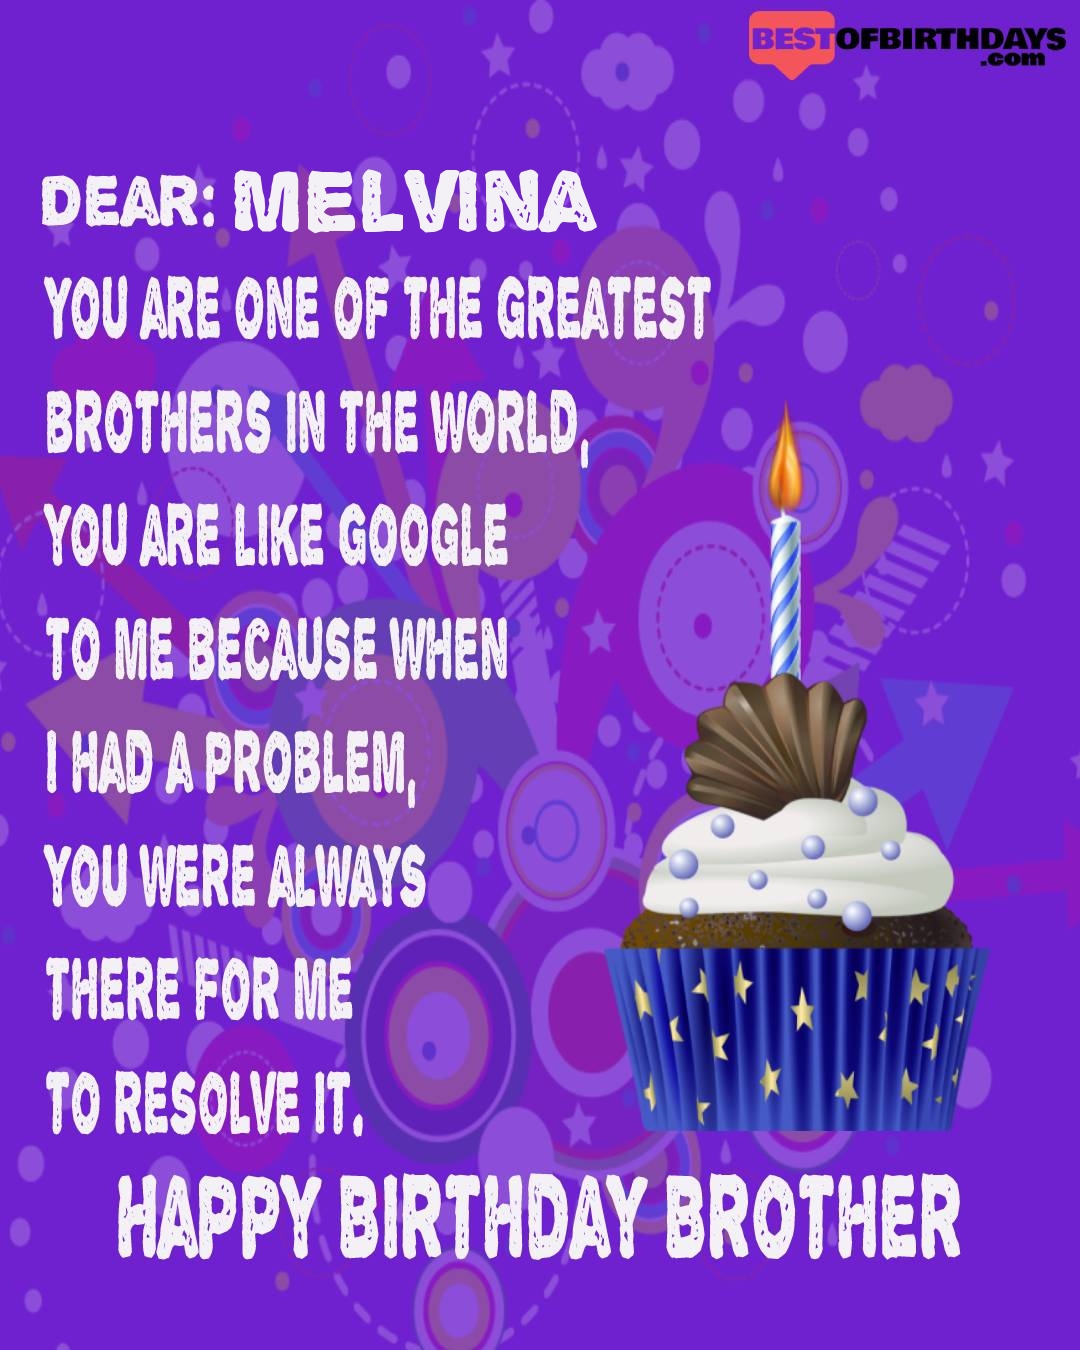 Happy birthday melvina bhai brother bro